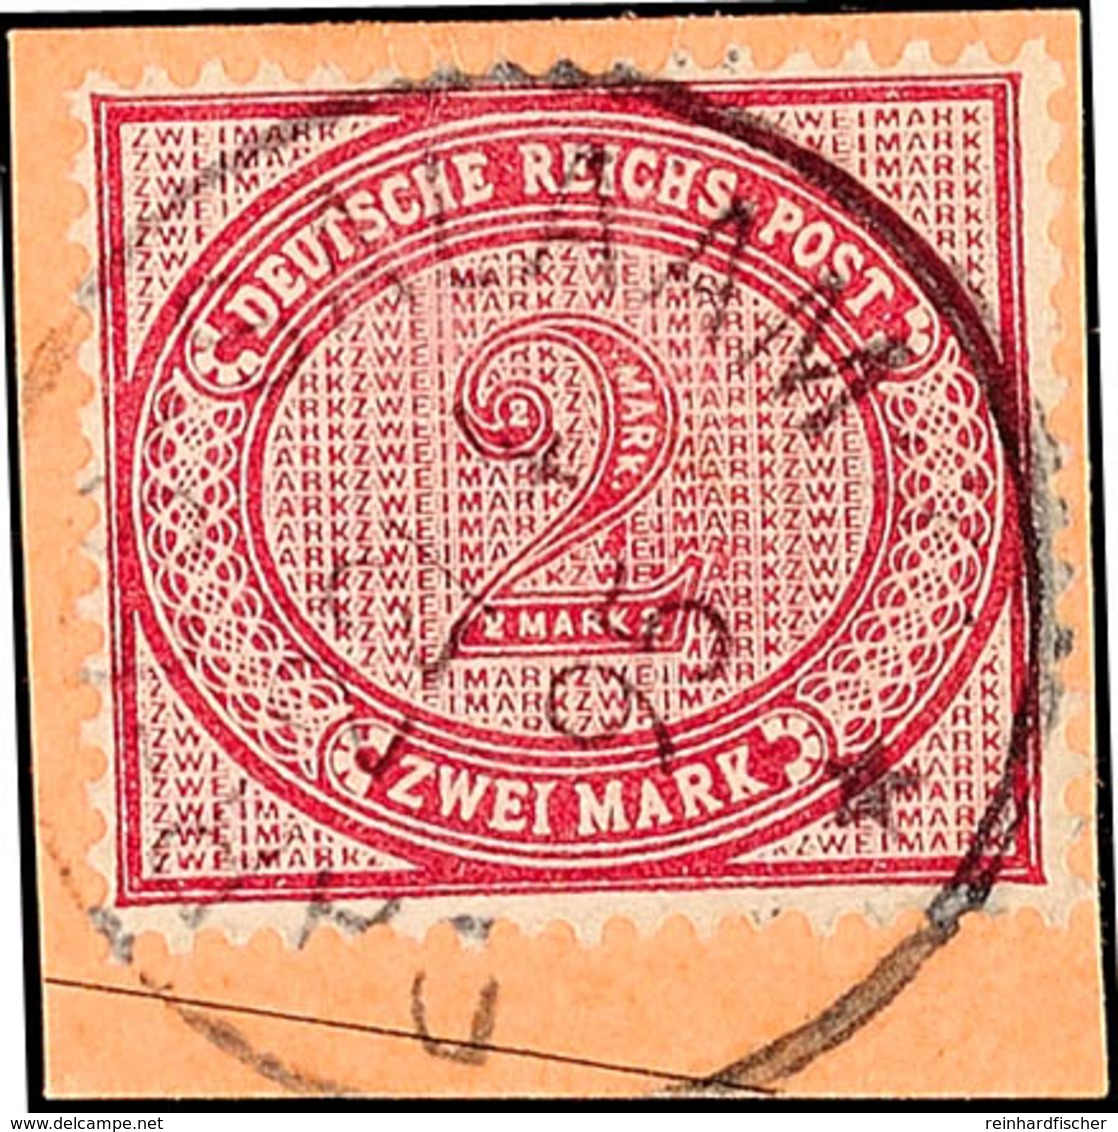 2 Mark Dunkelrotkarmin Mit Stempel "DAR-ES-SALAAM 22/4 95", Auf Briefstück, Kabinett, Katalog: V37e BS - German East Africa